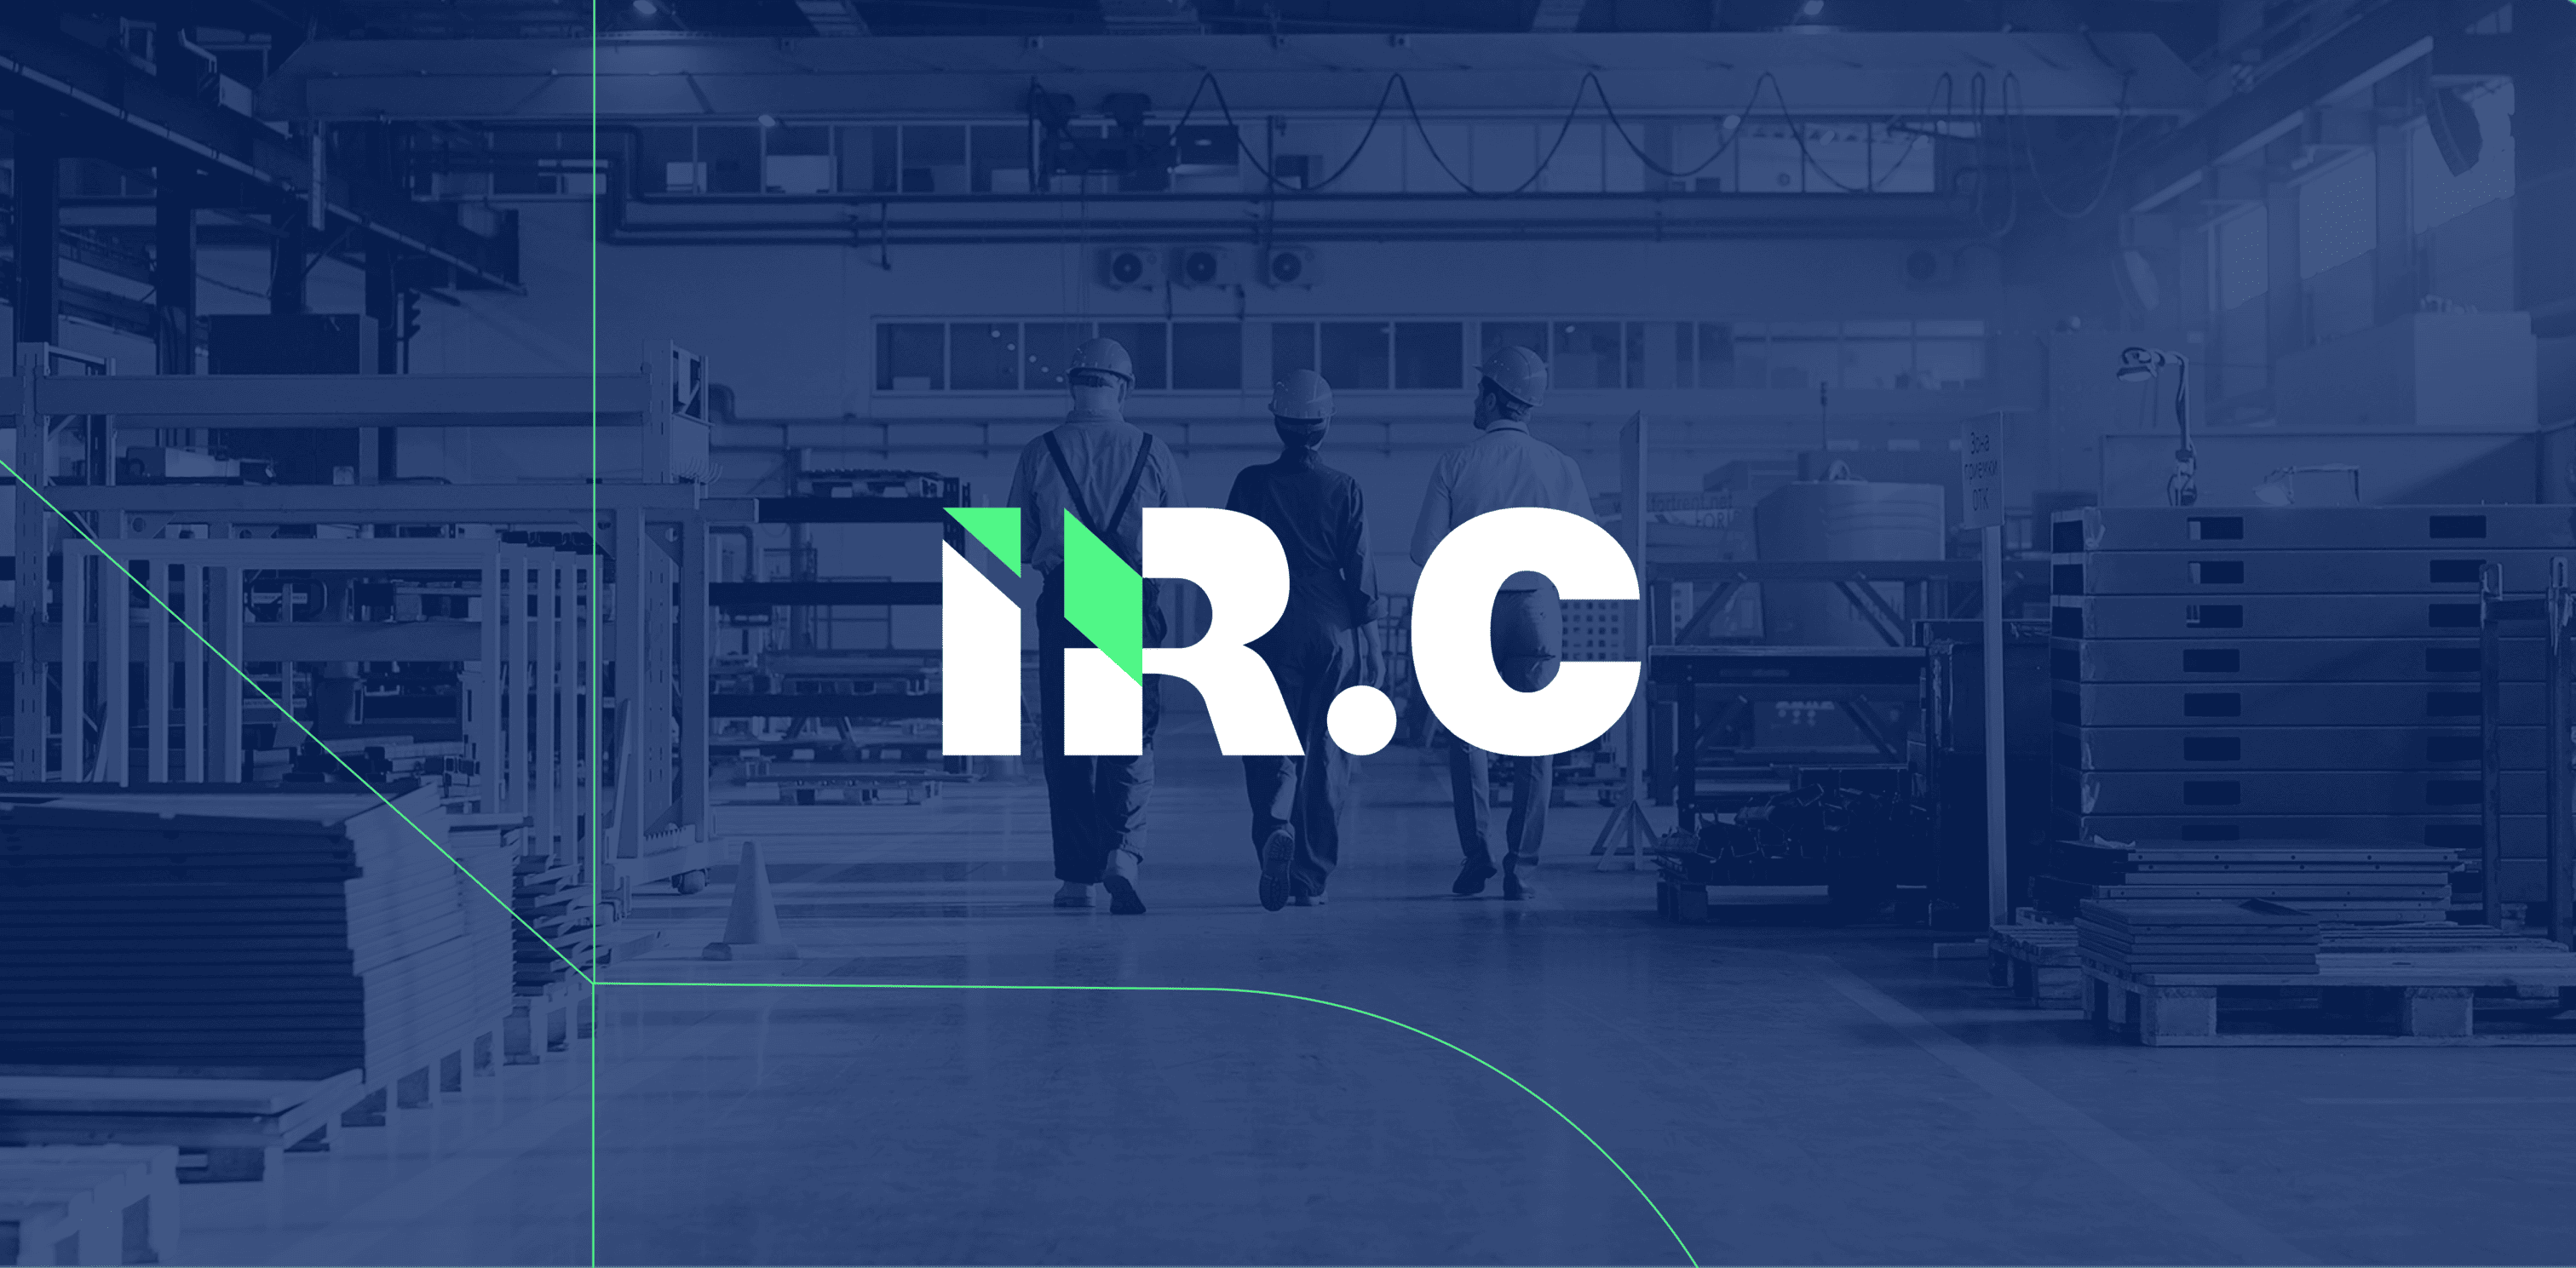 IRC_01_logo_vizu